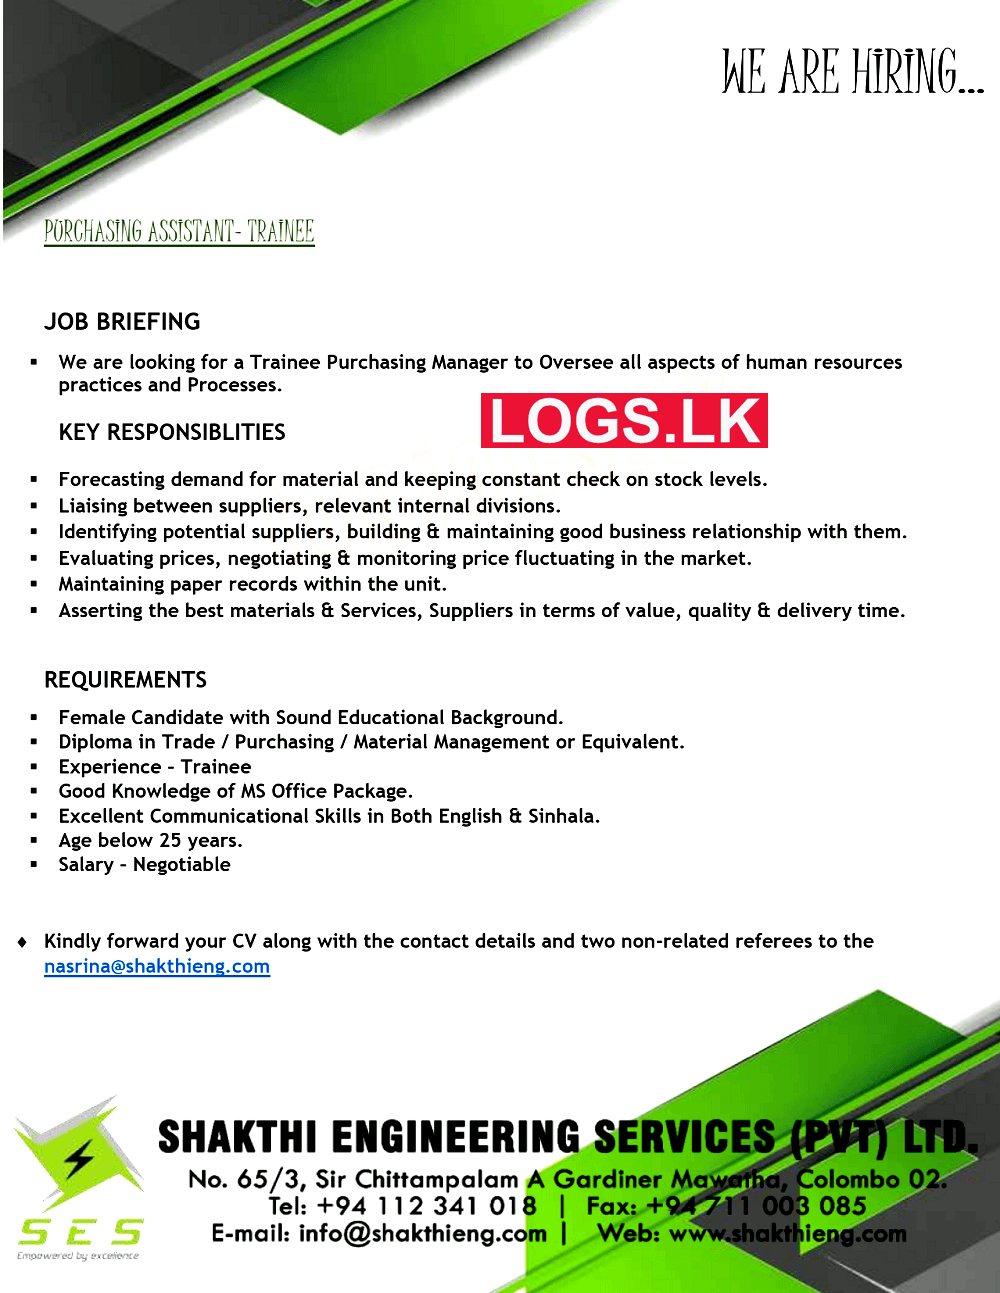 Purchasing Assistant Job Vacancy at Shakthi Engineering Services (Pvt) Ltd Job Vacancies